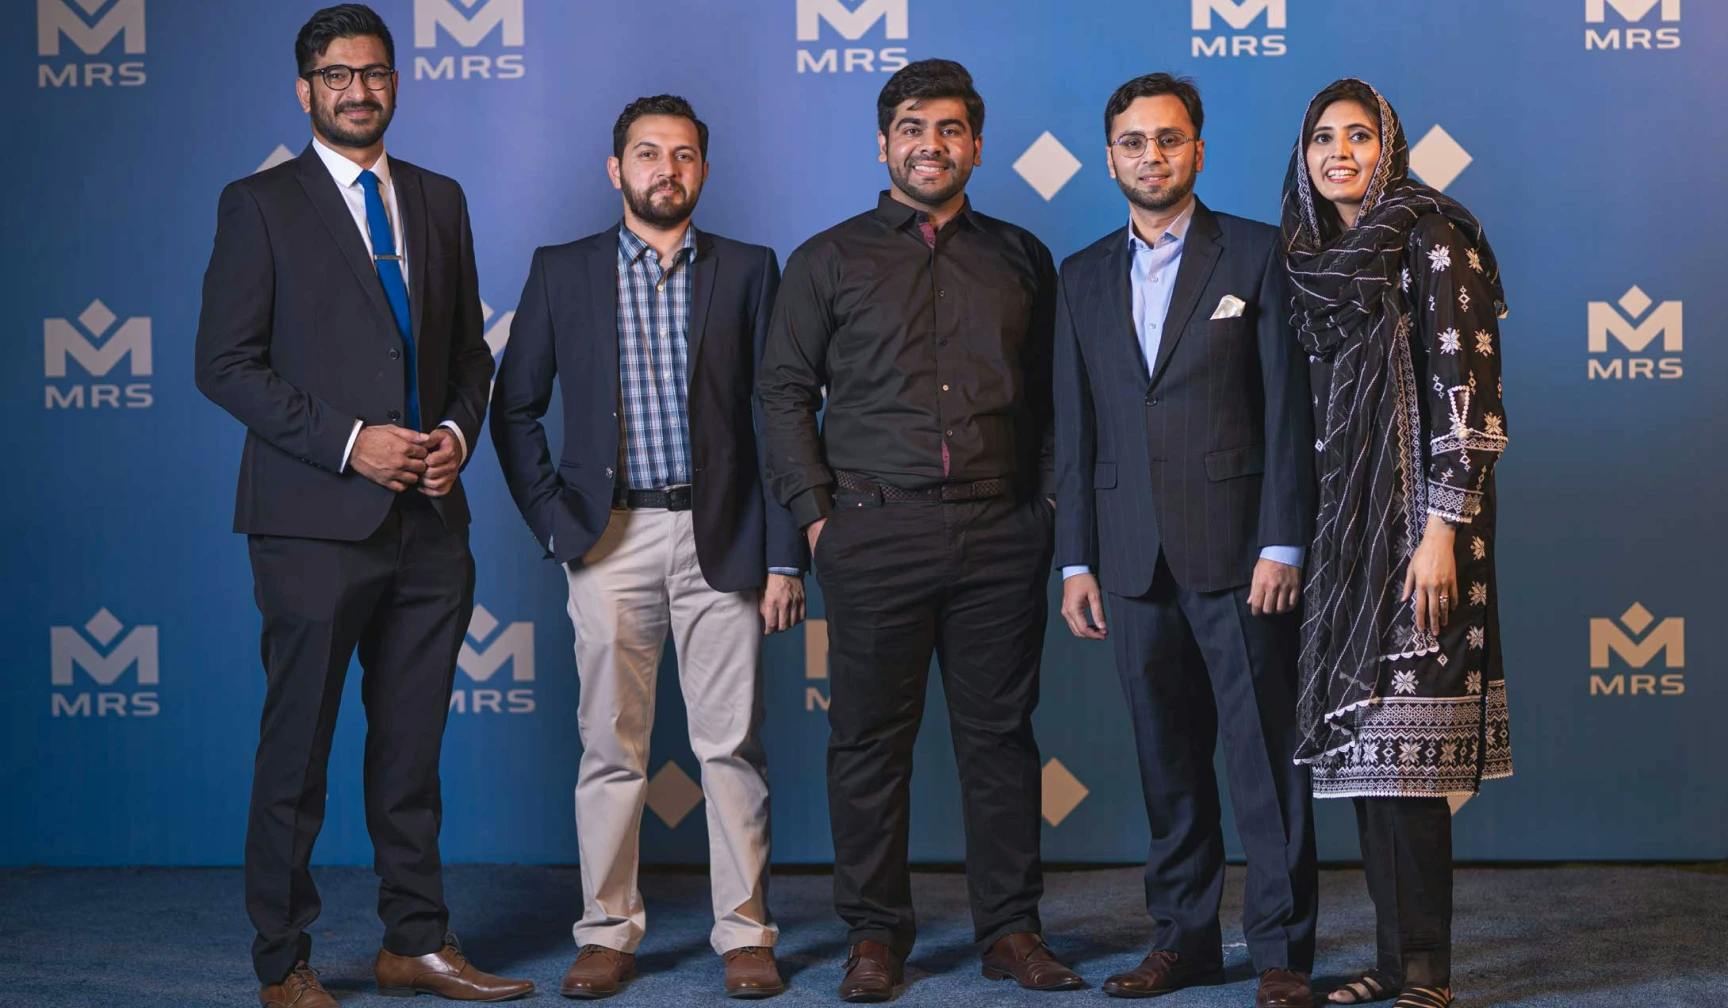 Group photo of all the CxO of the Company, From Left, CEO Manzil Studio - Rafeh Abbasi, CPMO Zain ul Hassan, CTO Umer Farooq, CEO Dr. Mansoor Shaukat, COO Attiya Mansoor | MRS Technologies Pakistan